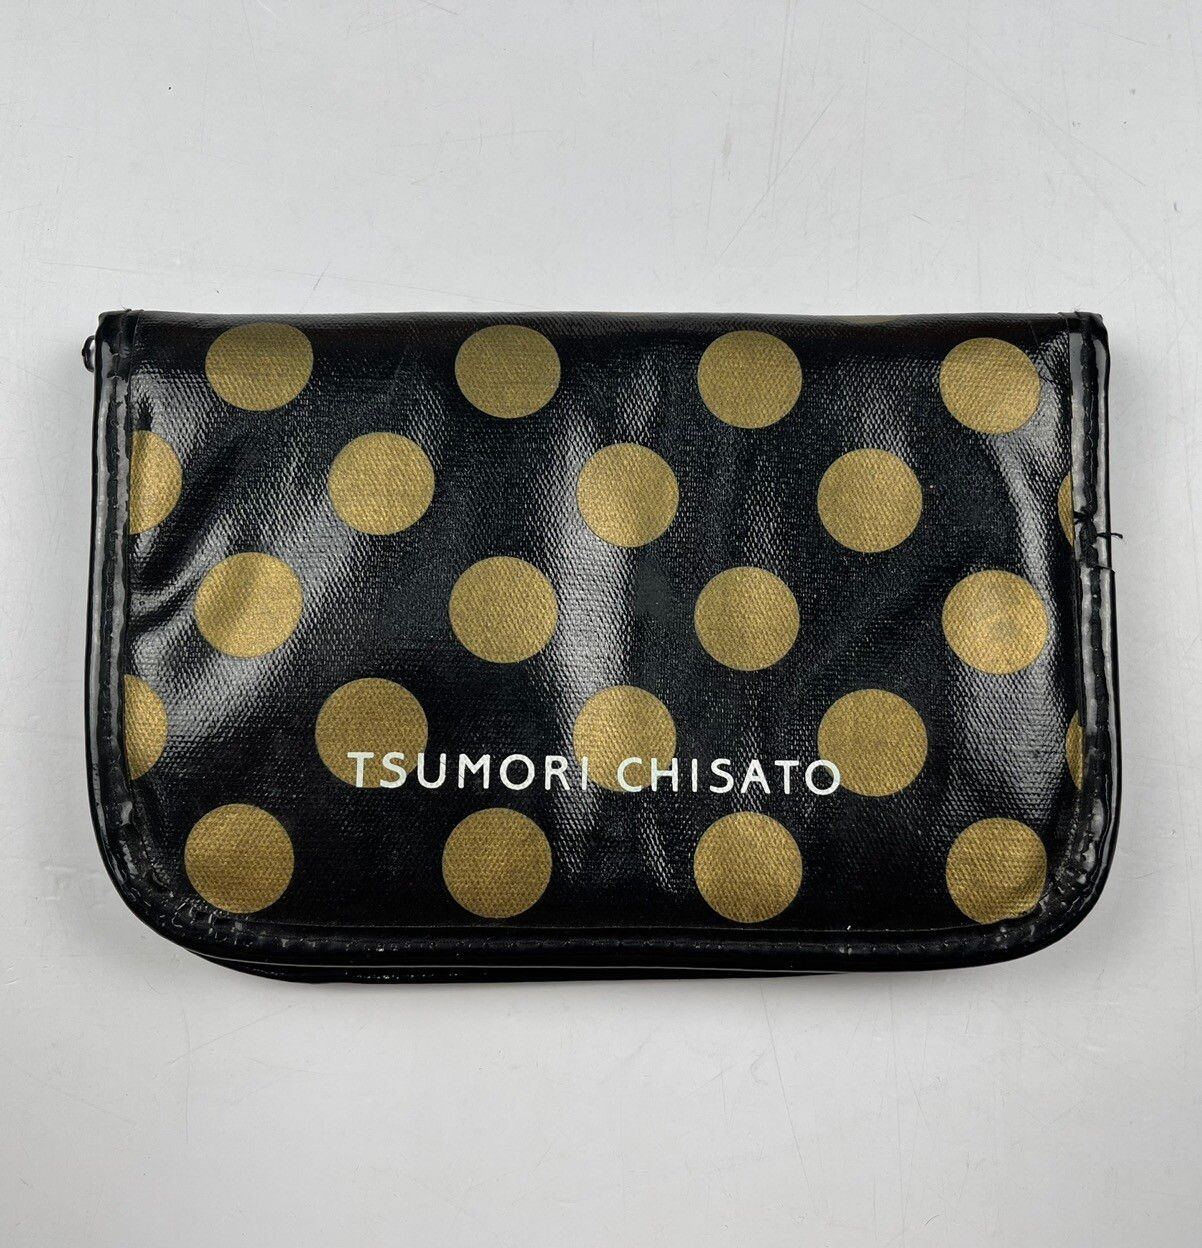 Issey Miyake - tsumori chisato bag purse pouch t6 - 1